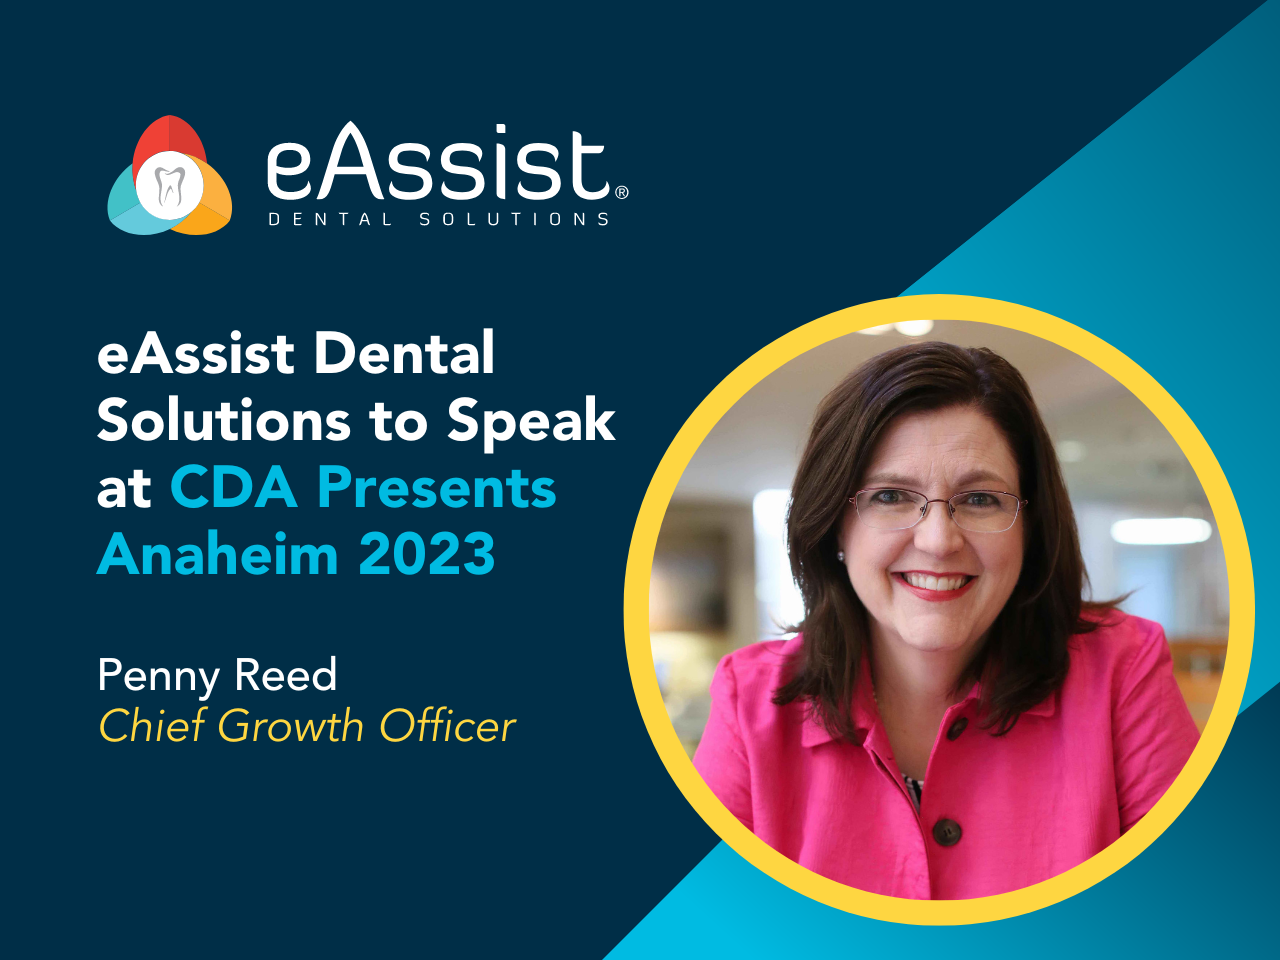 eAssist Dental Solutions to Speak at CDA Presents Anaheim 2023